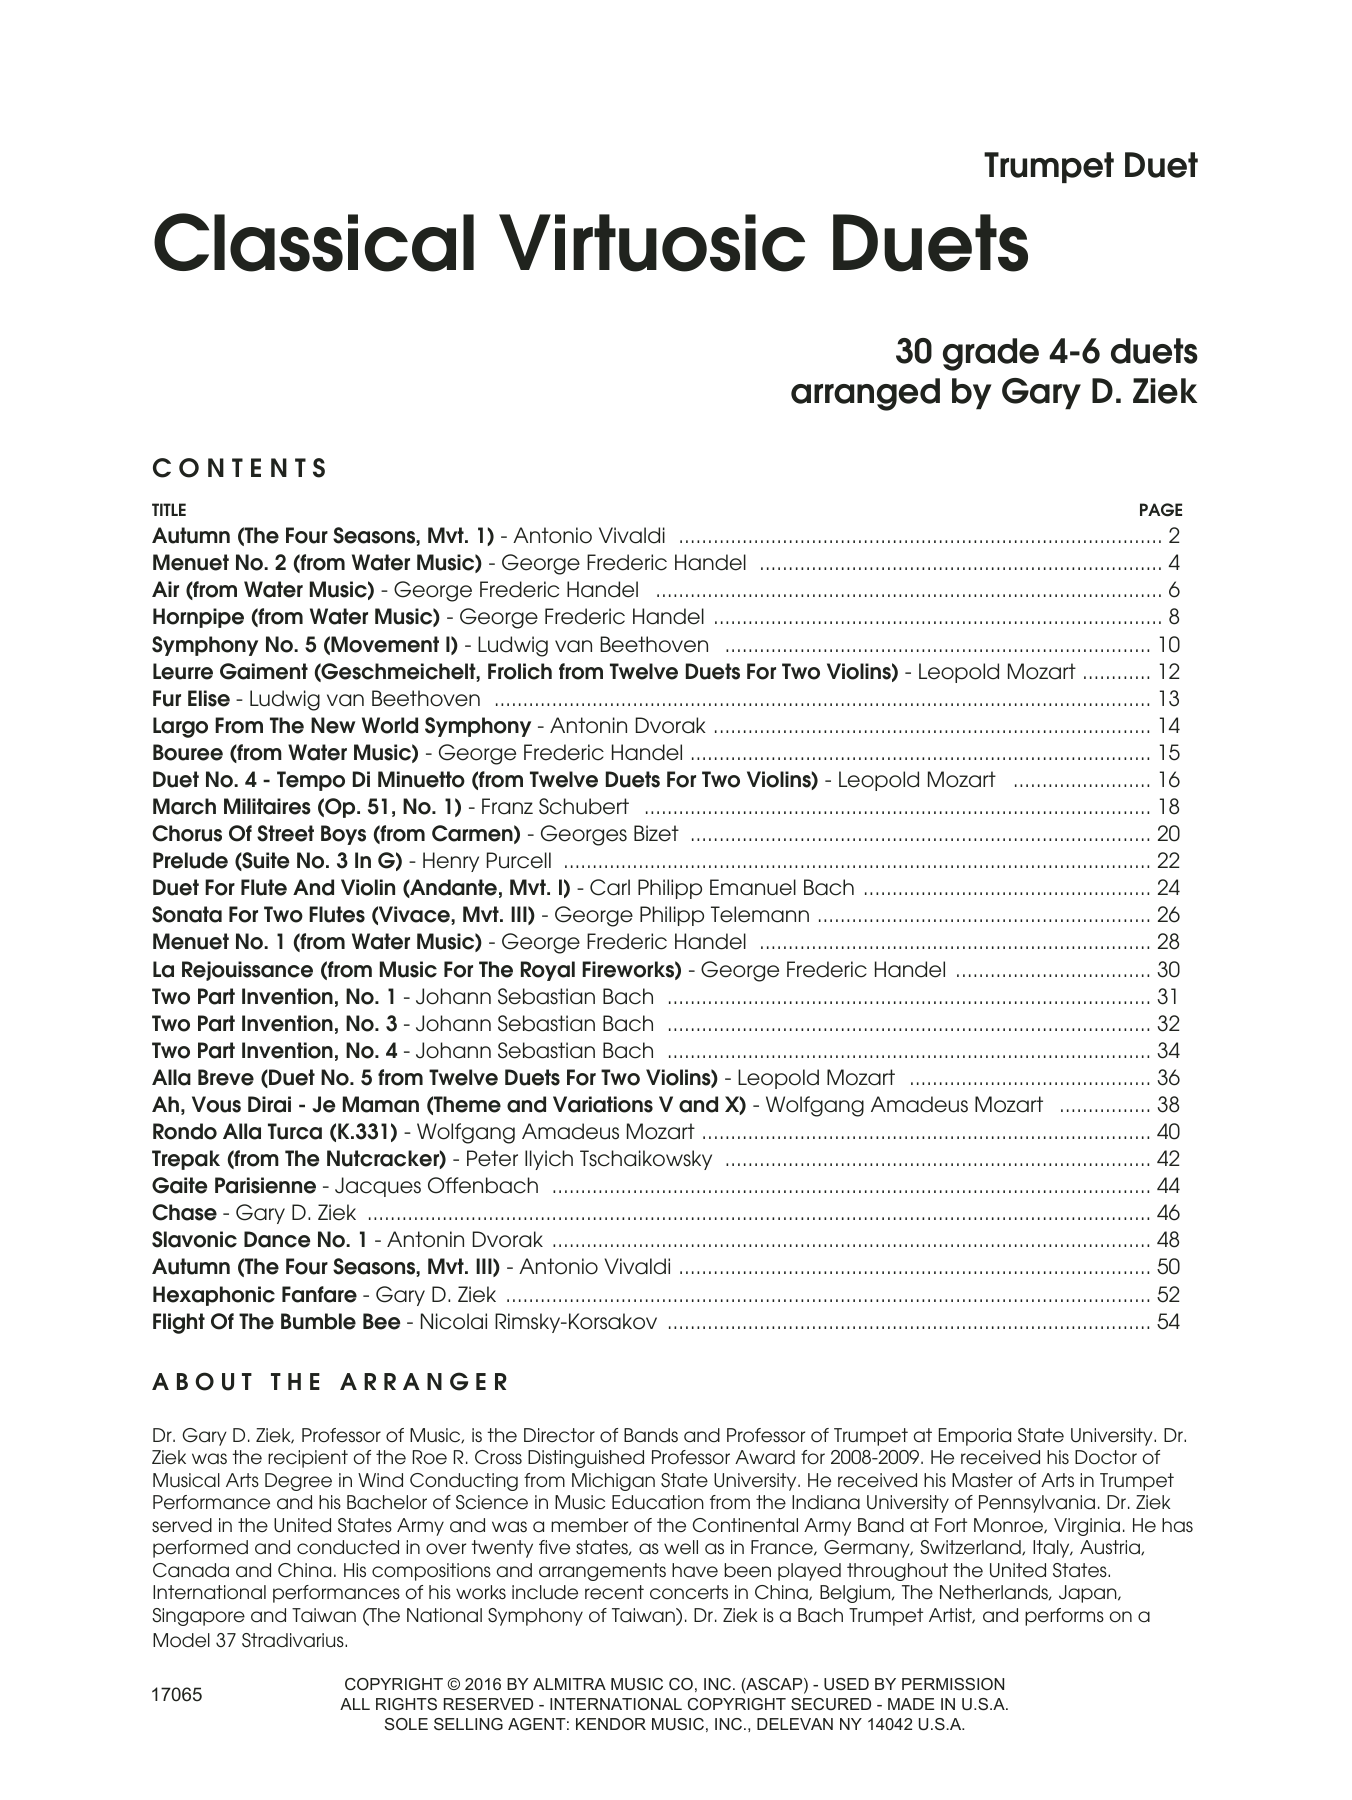 Download Gary Ziek Classic Virtuosic Duets (30 Grade 4-6 D Sheet Music